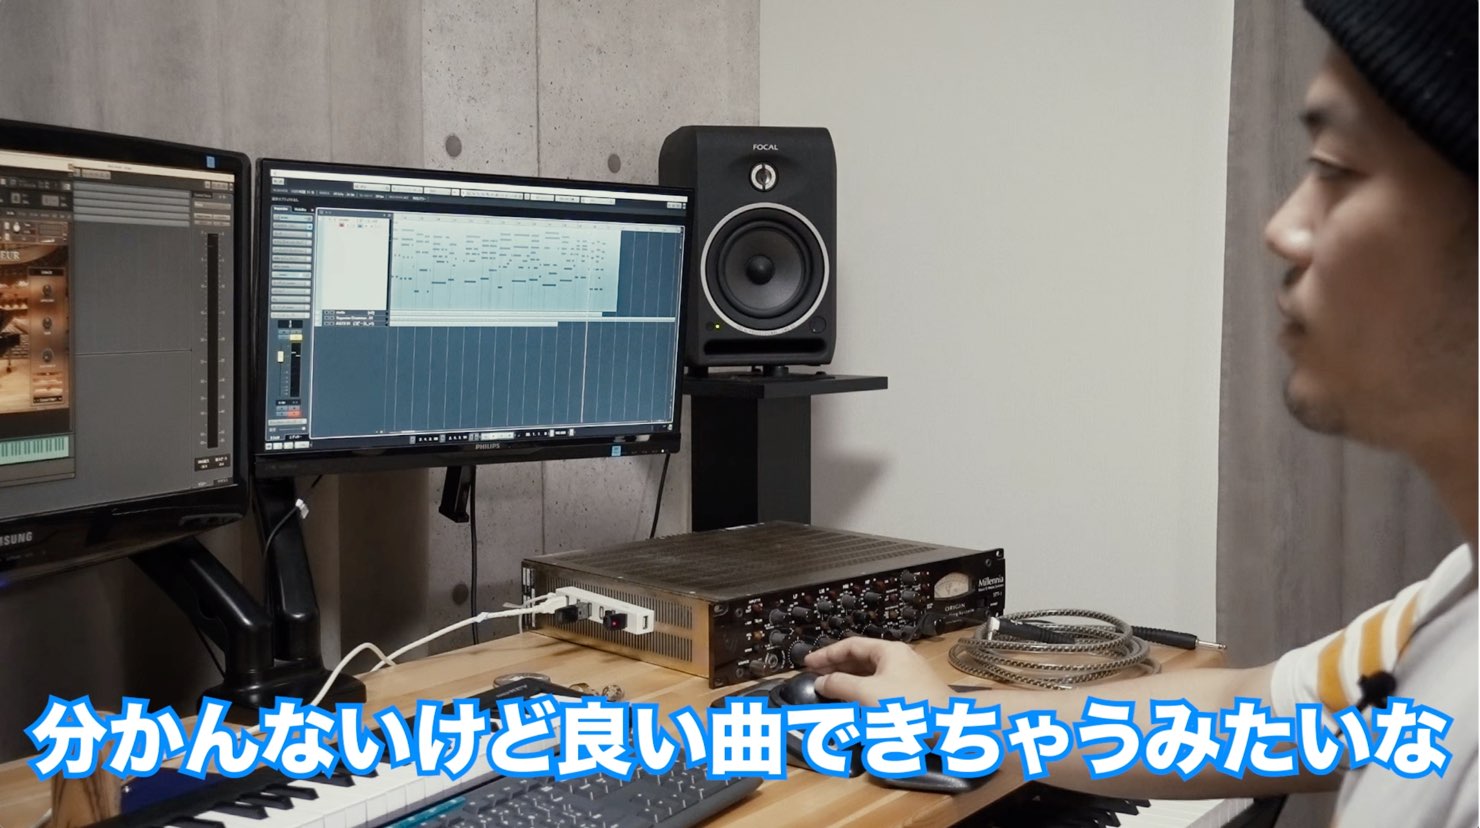 Yusuke-Shirato-Tips-about-music-theory